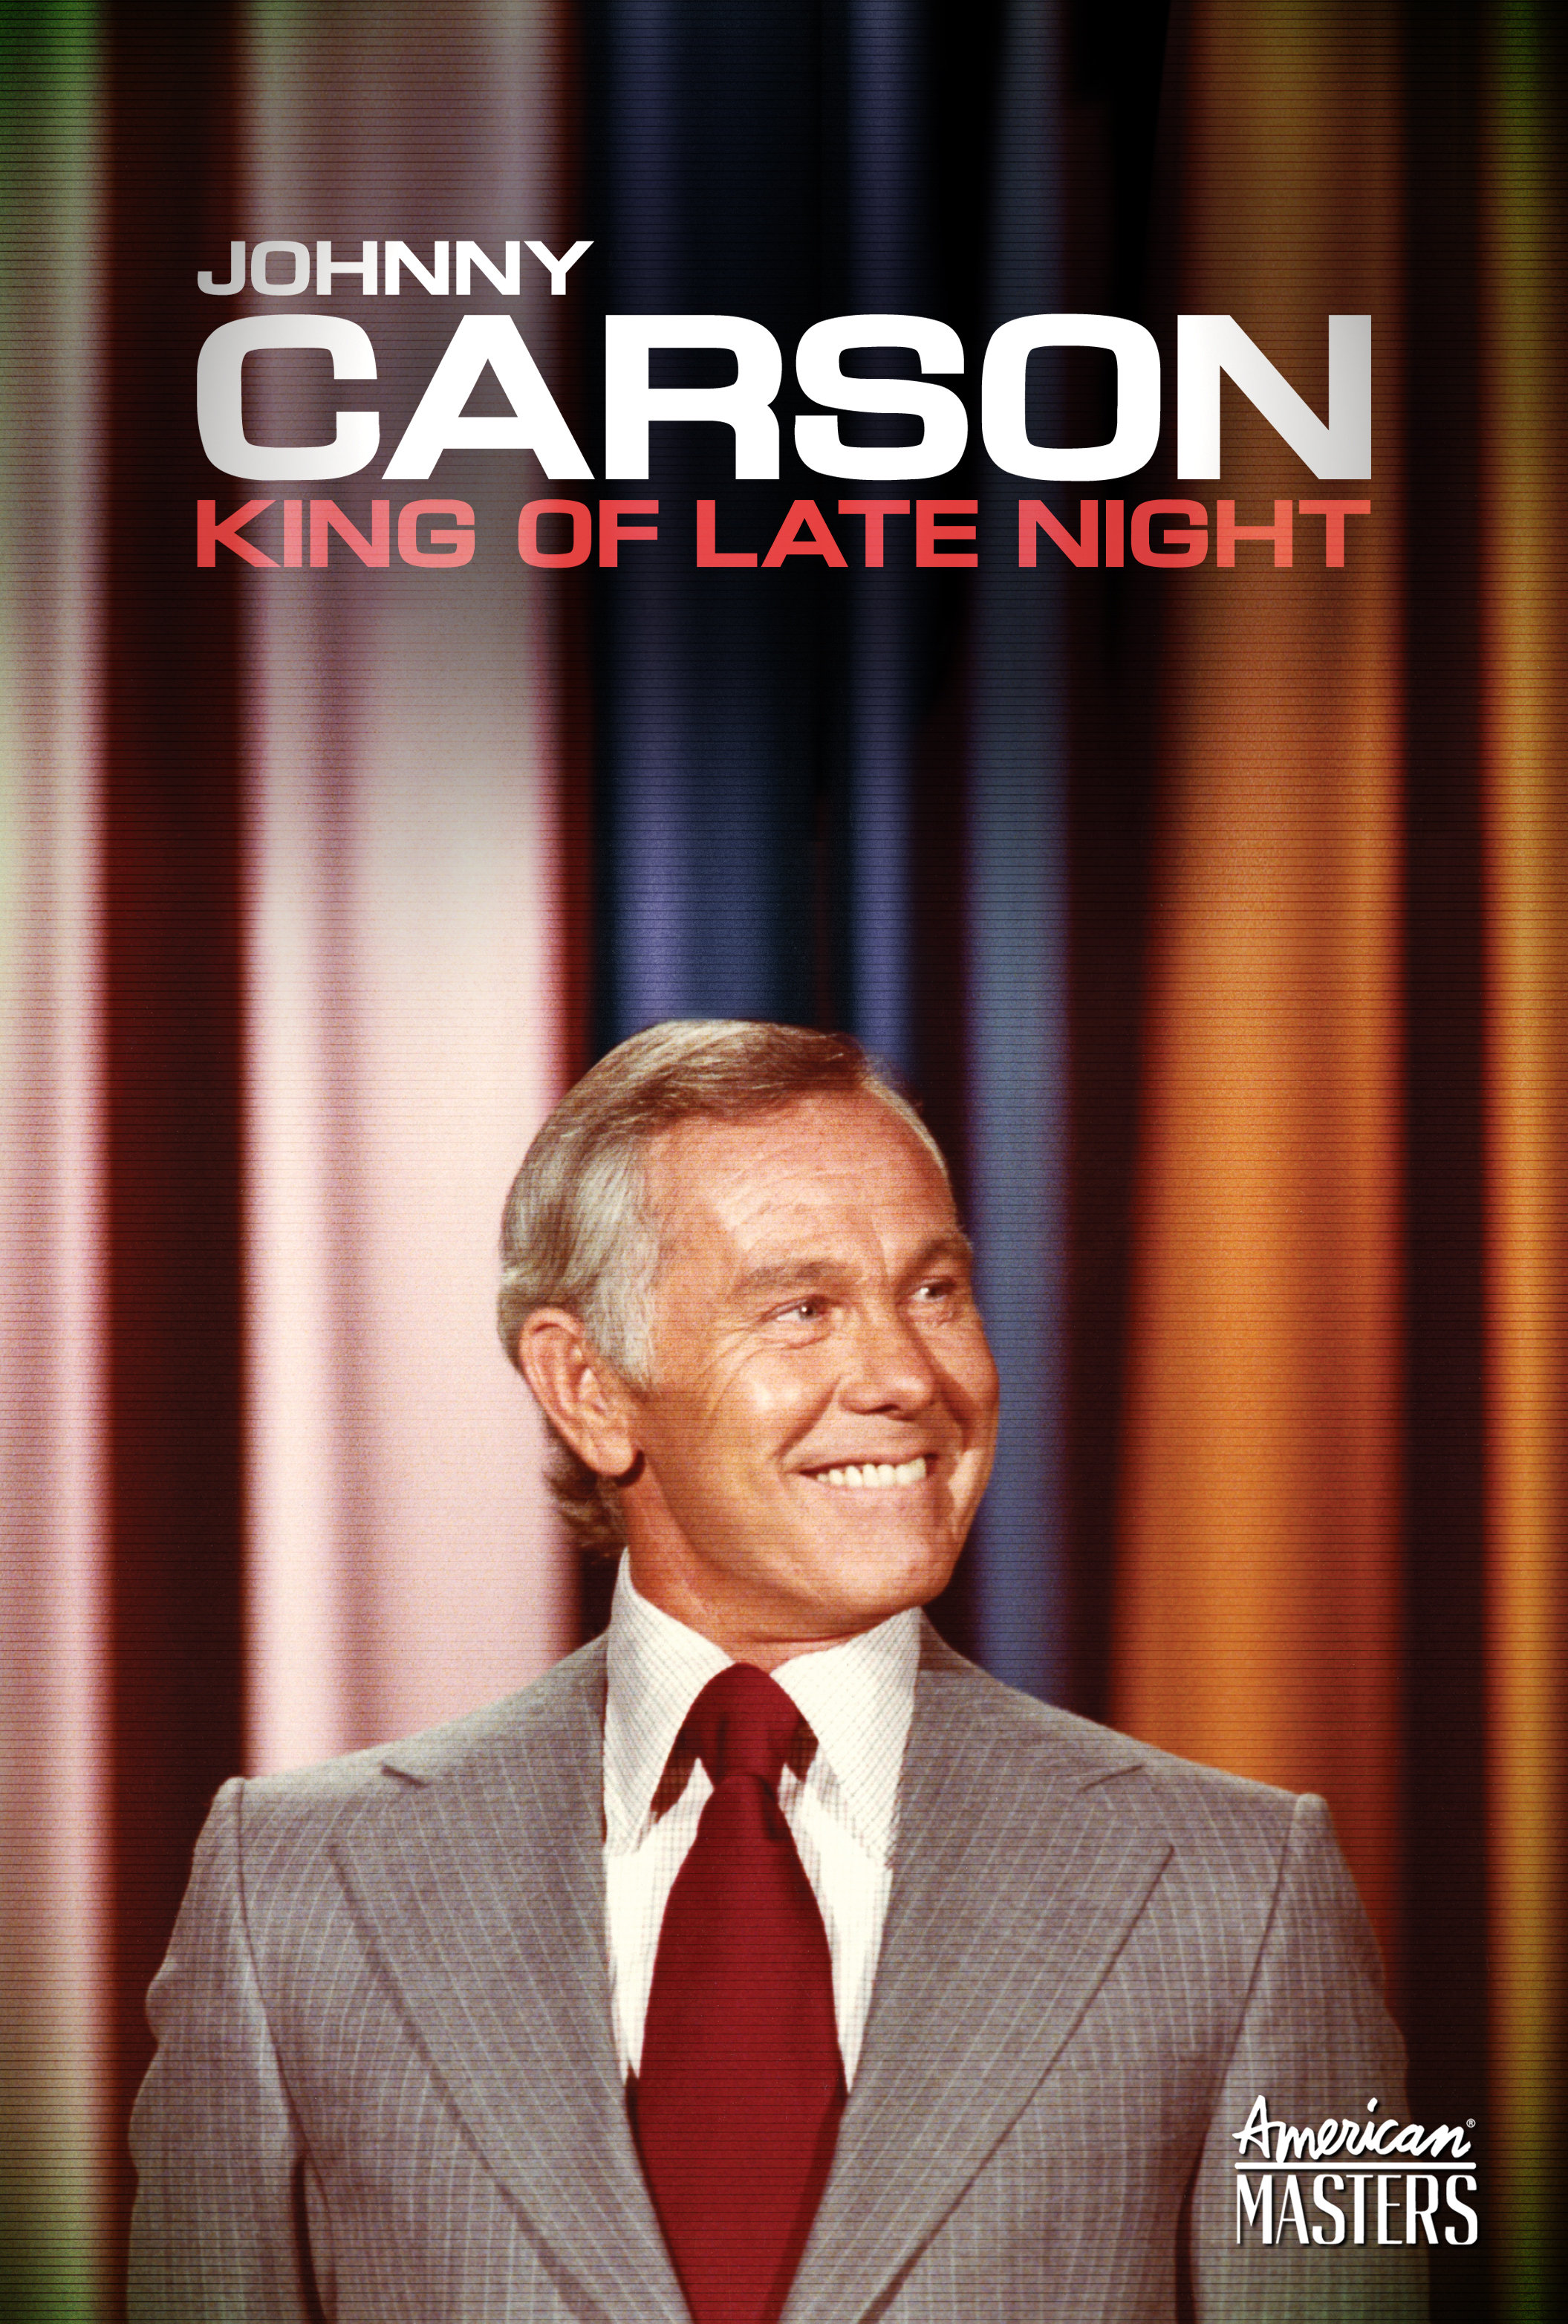 Nonton film Johnny Carson: King of Late Night layarkaca21 indoxx1 ganool online streaming terbaru